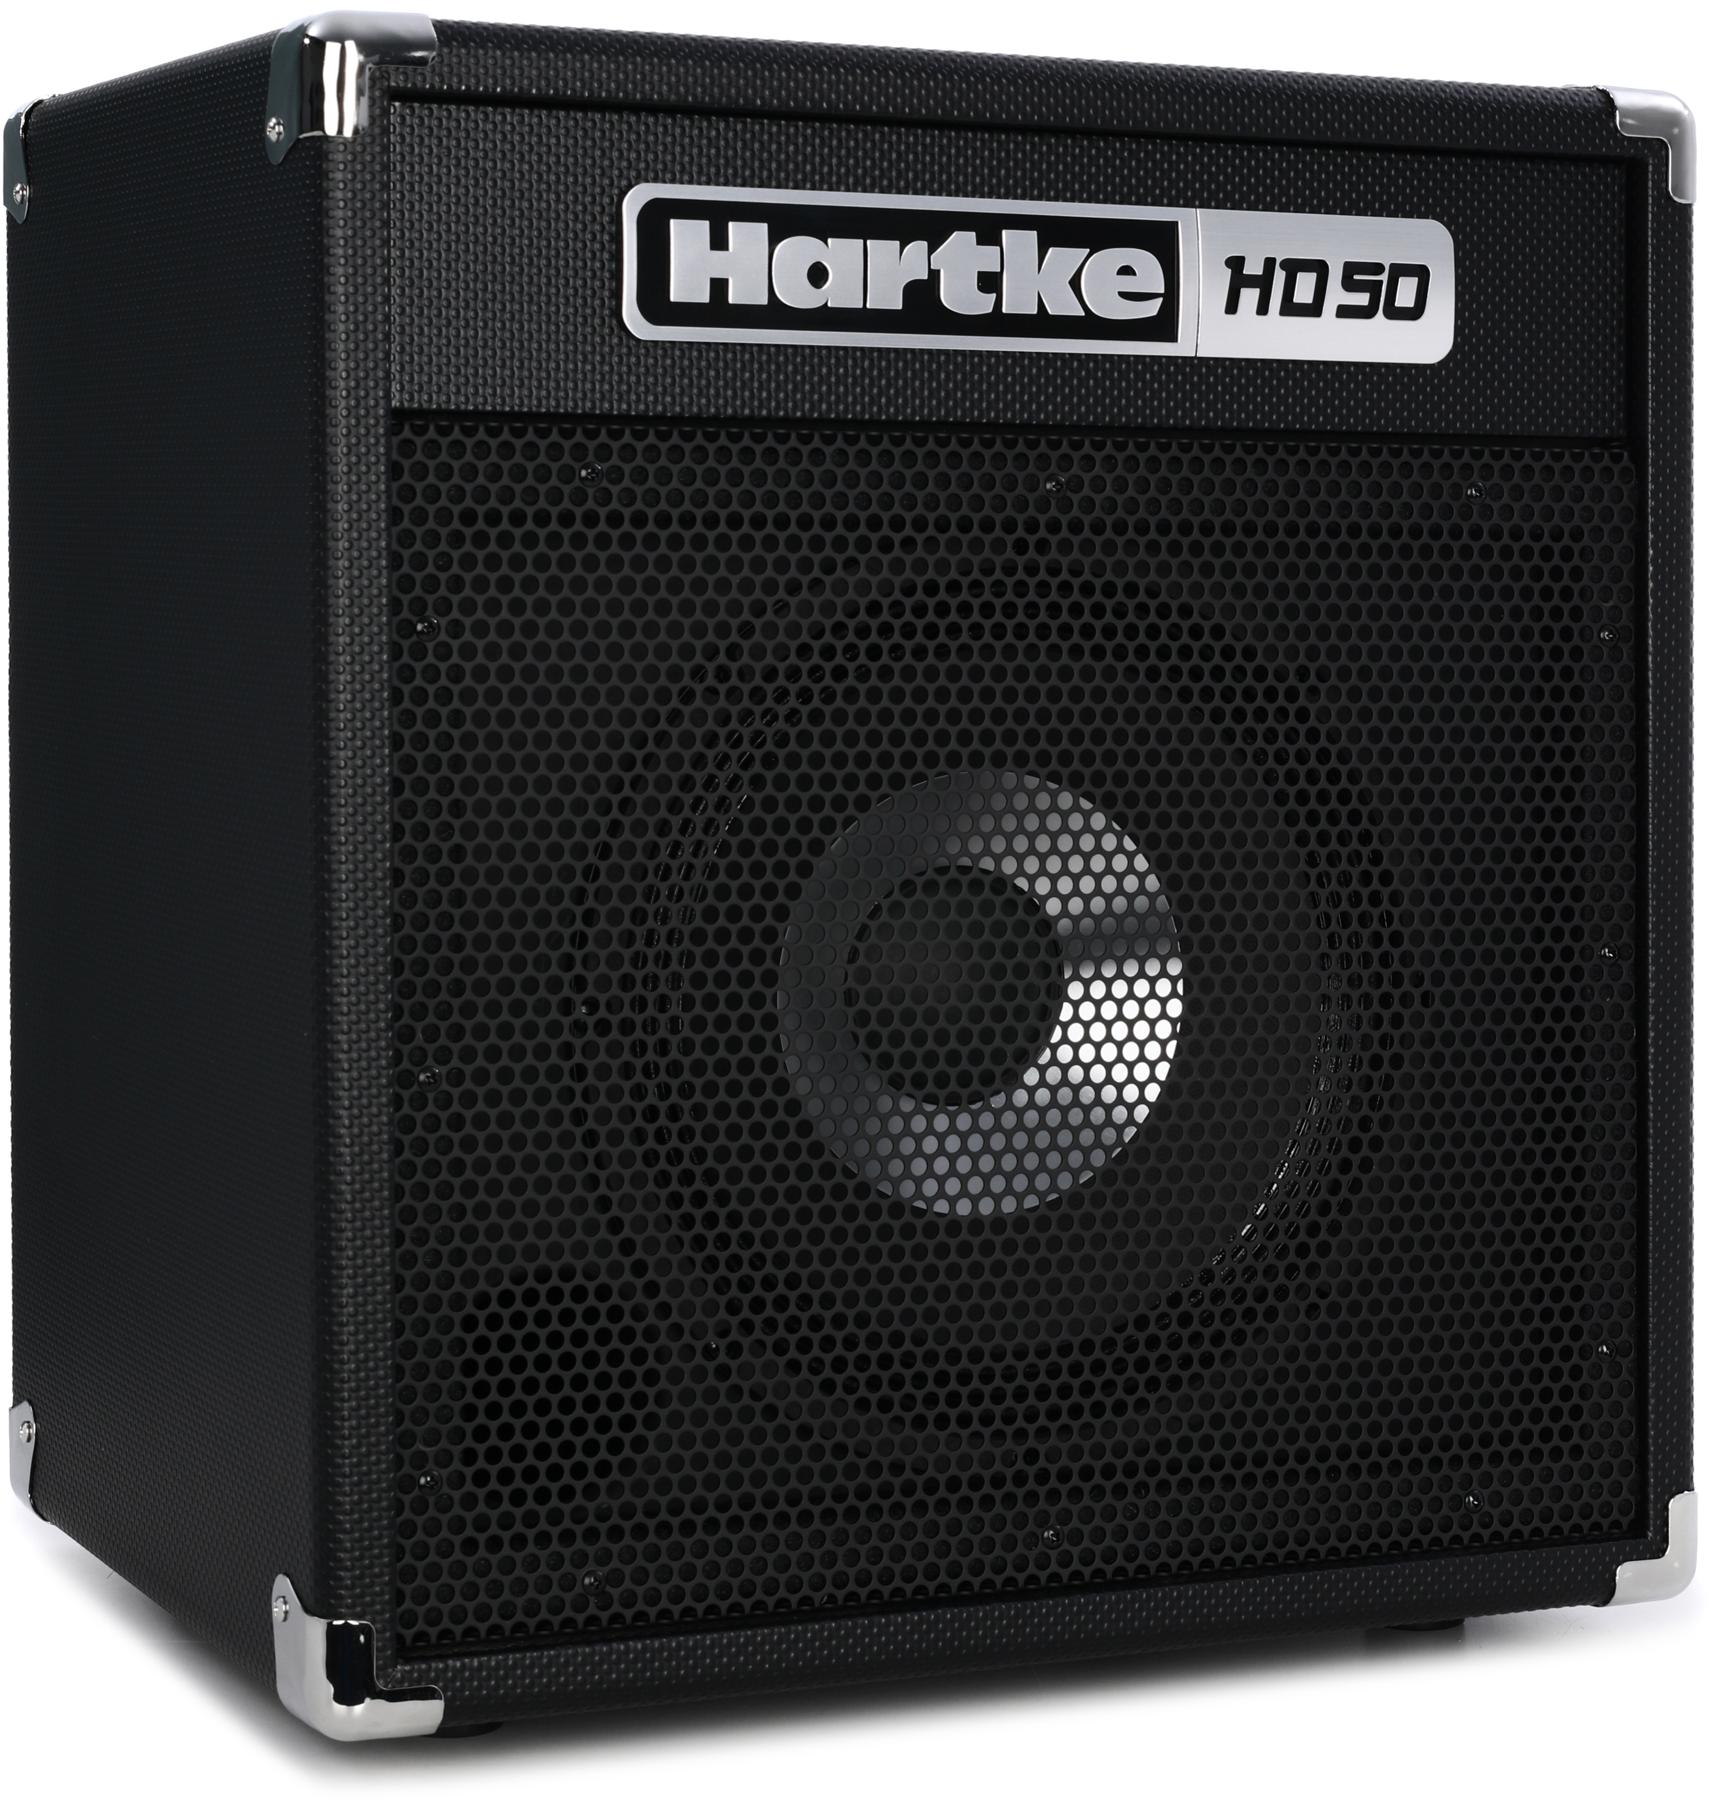 3. Hartke HD50